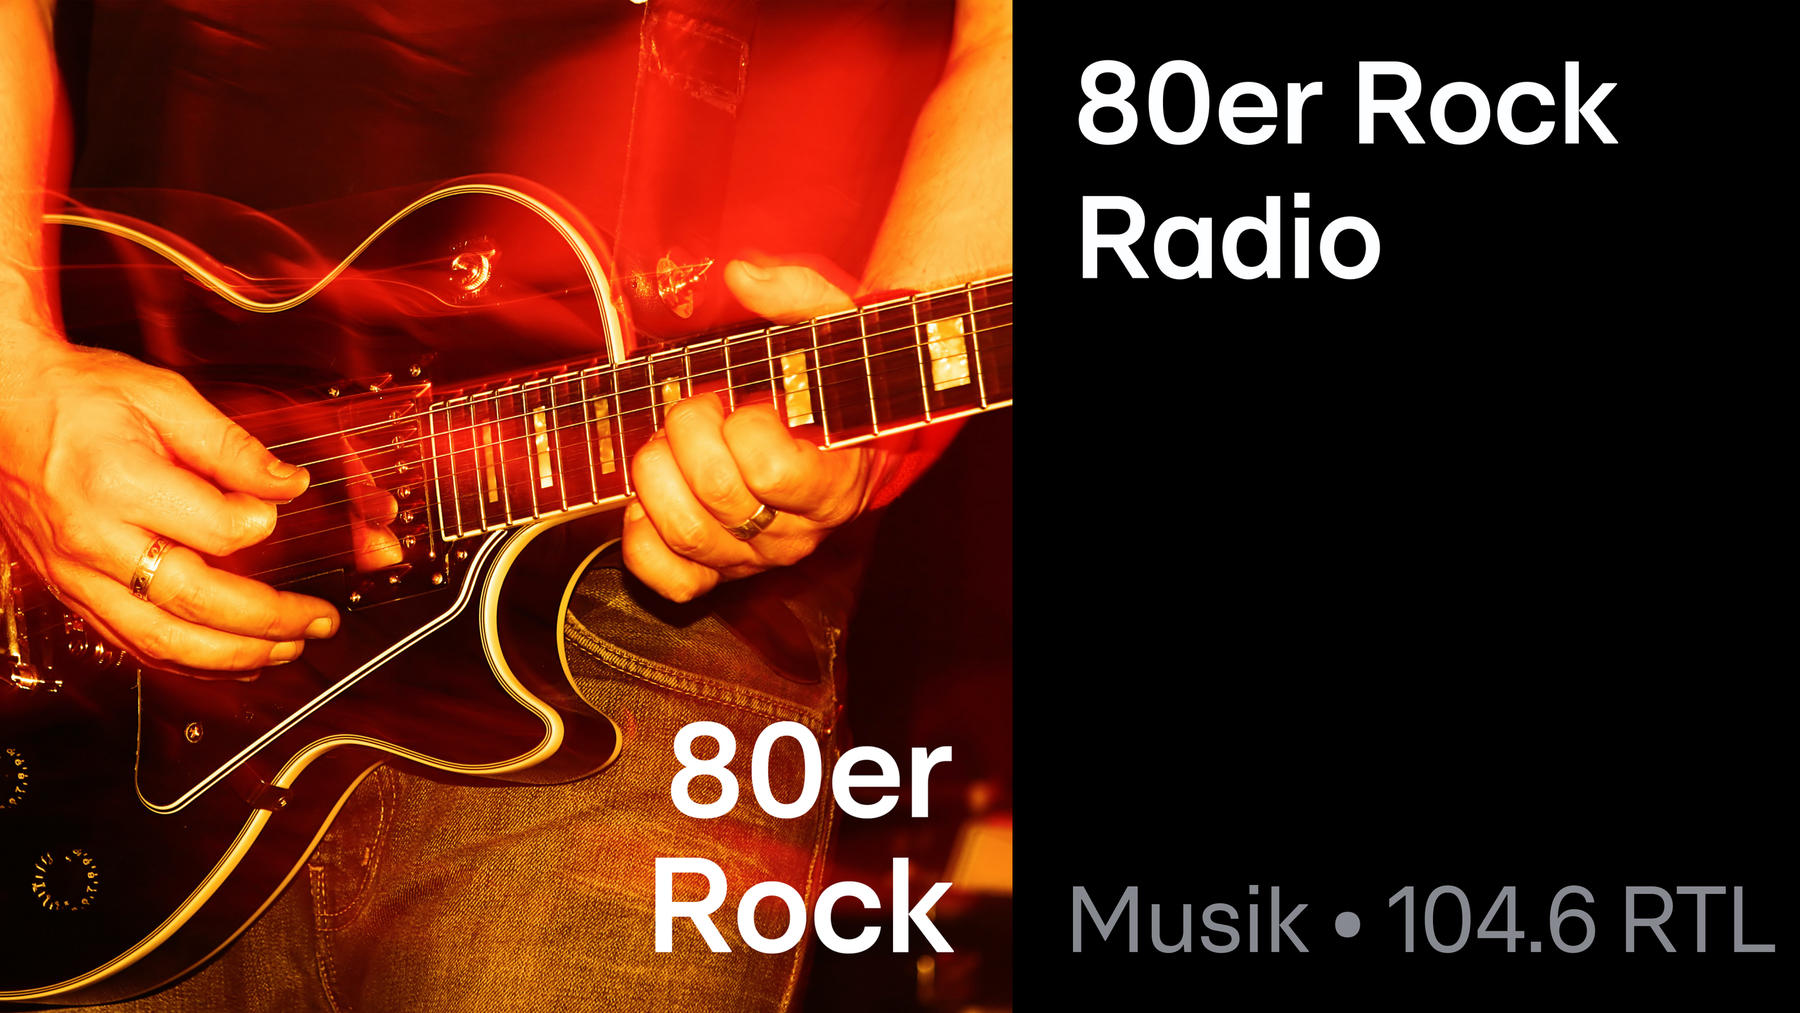 80er Rock Radio